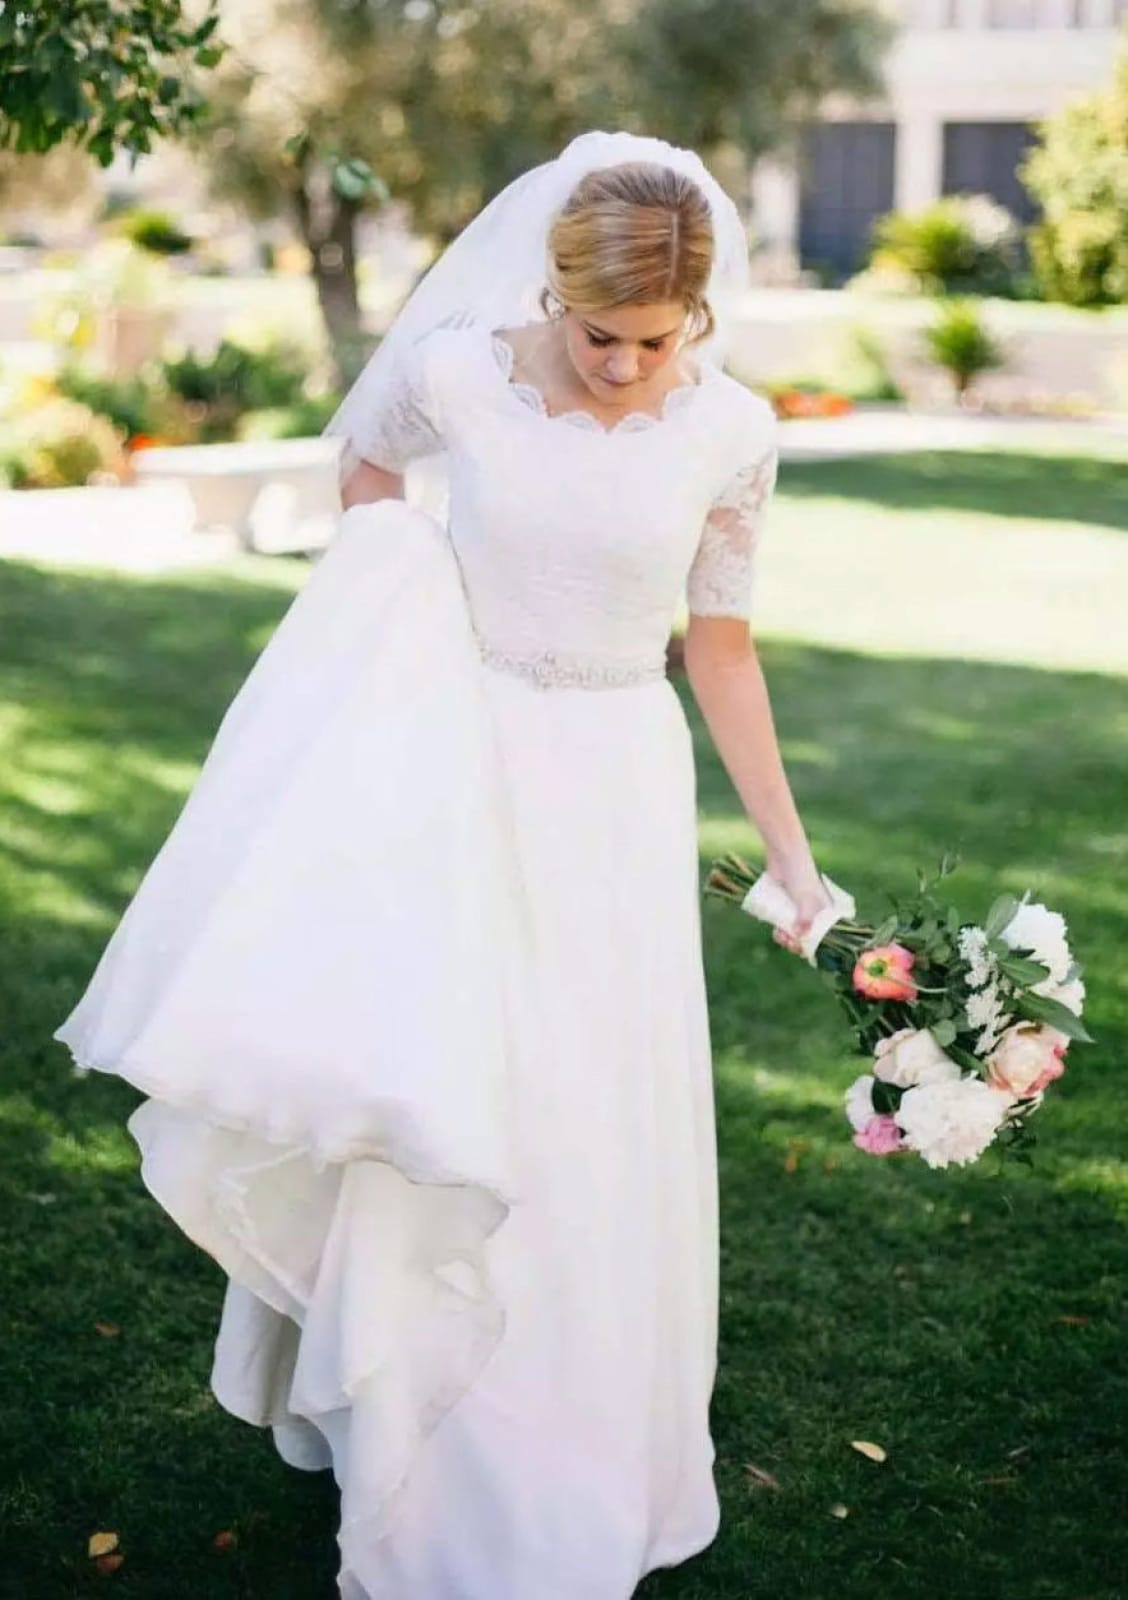 A-Line Scalloped Neck Satin Wedding Dress, Beaded Waistband